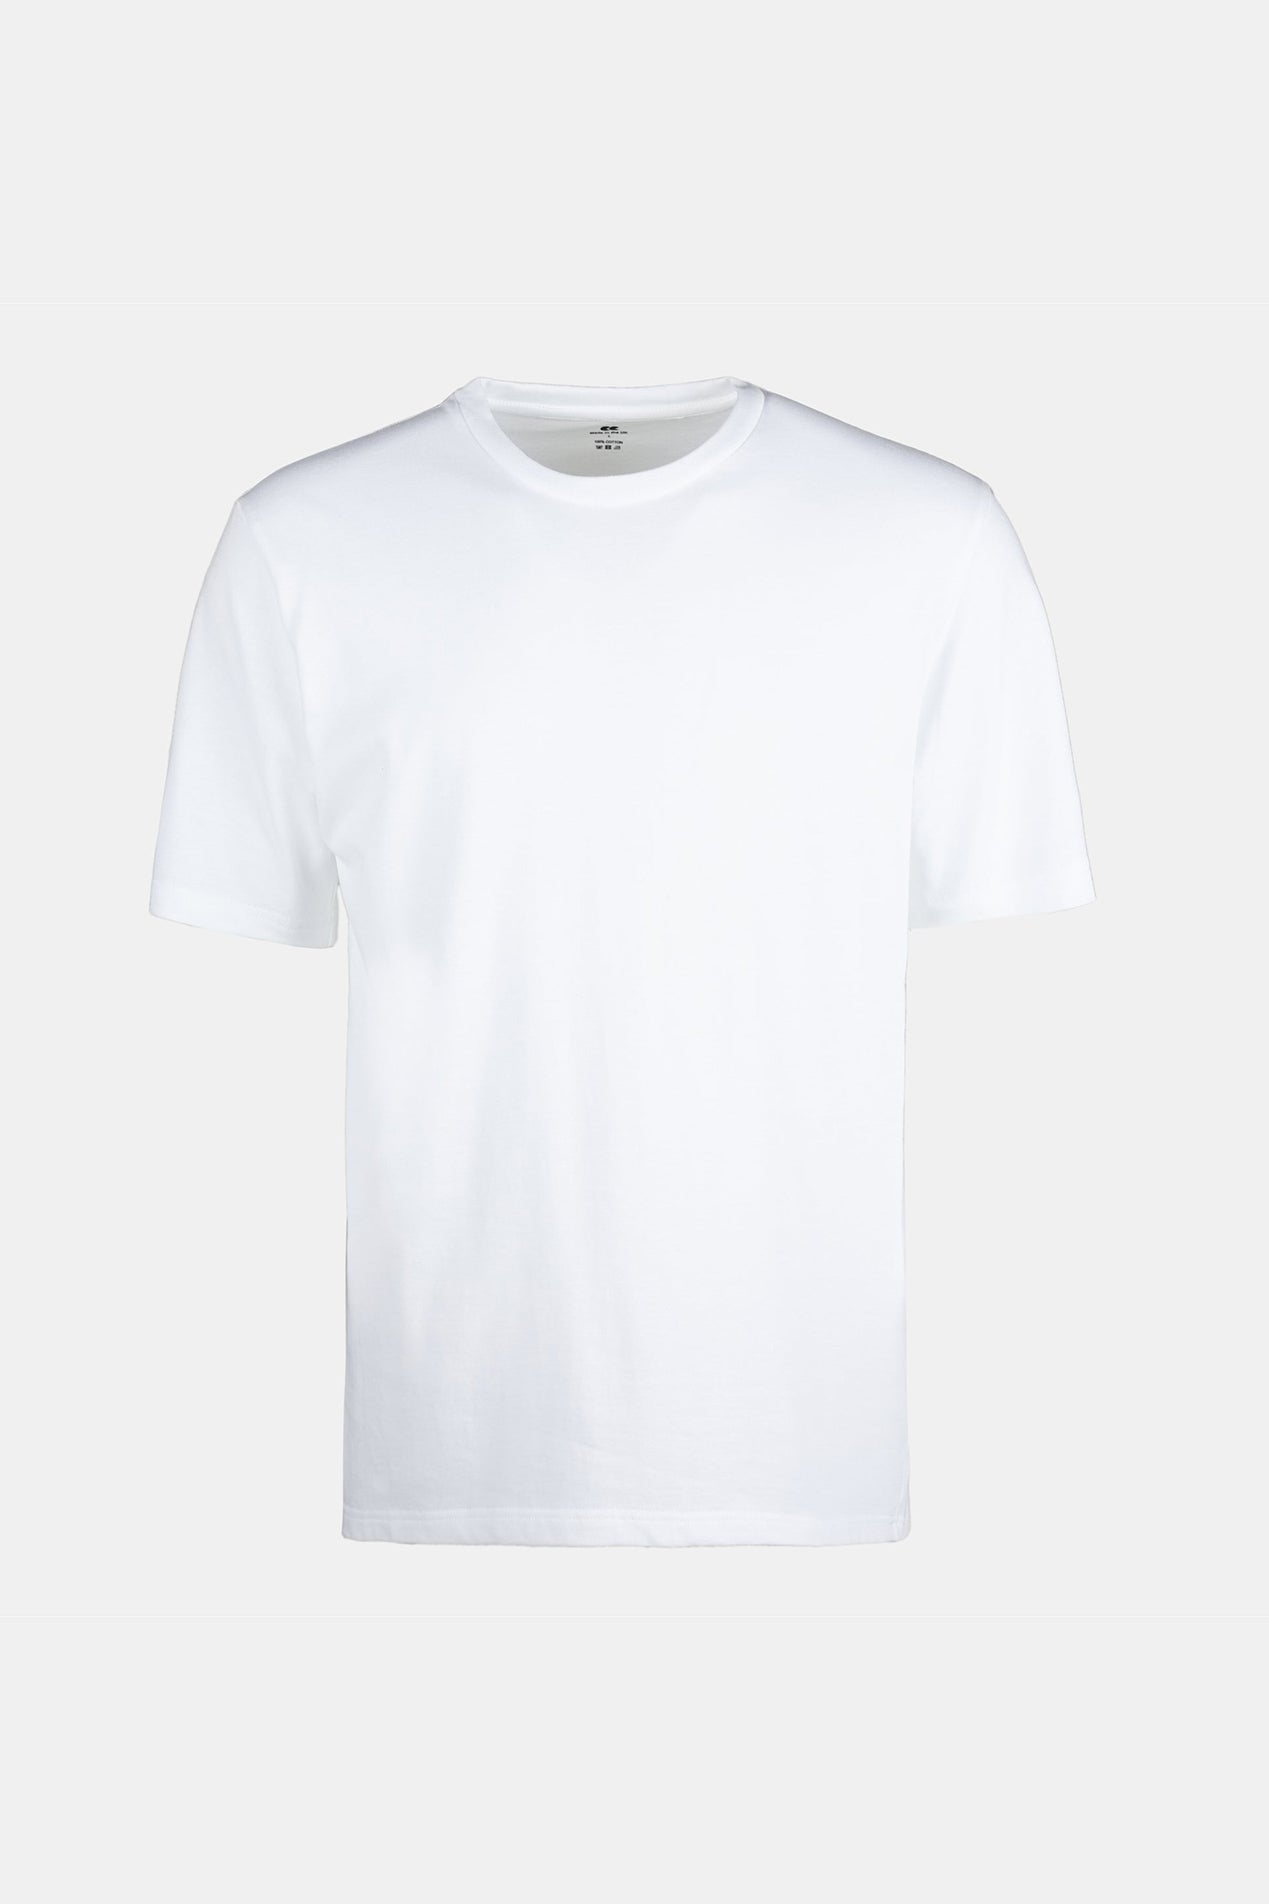 Men's Short Sleeve T Shirt White - Community Clothing